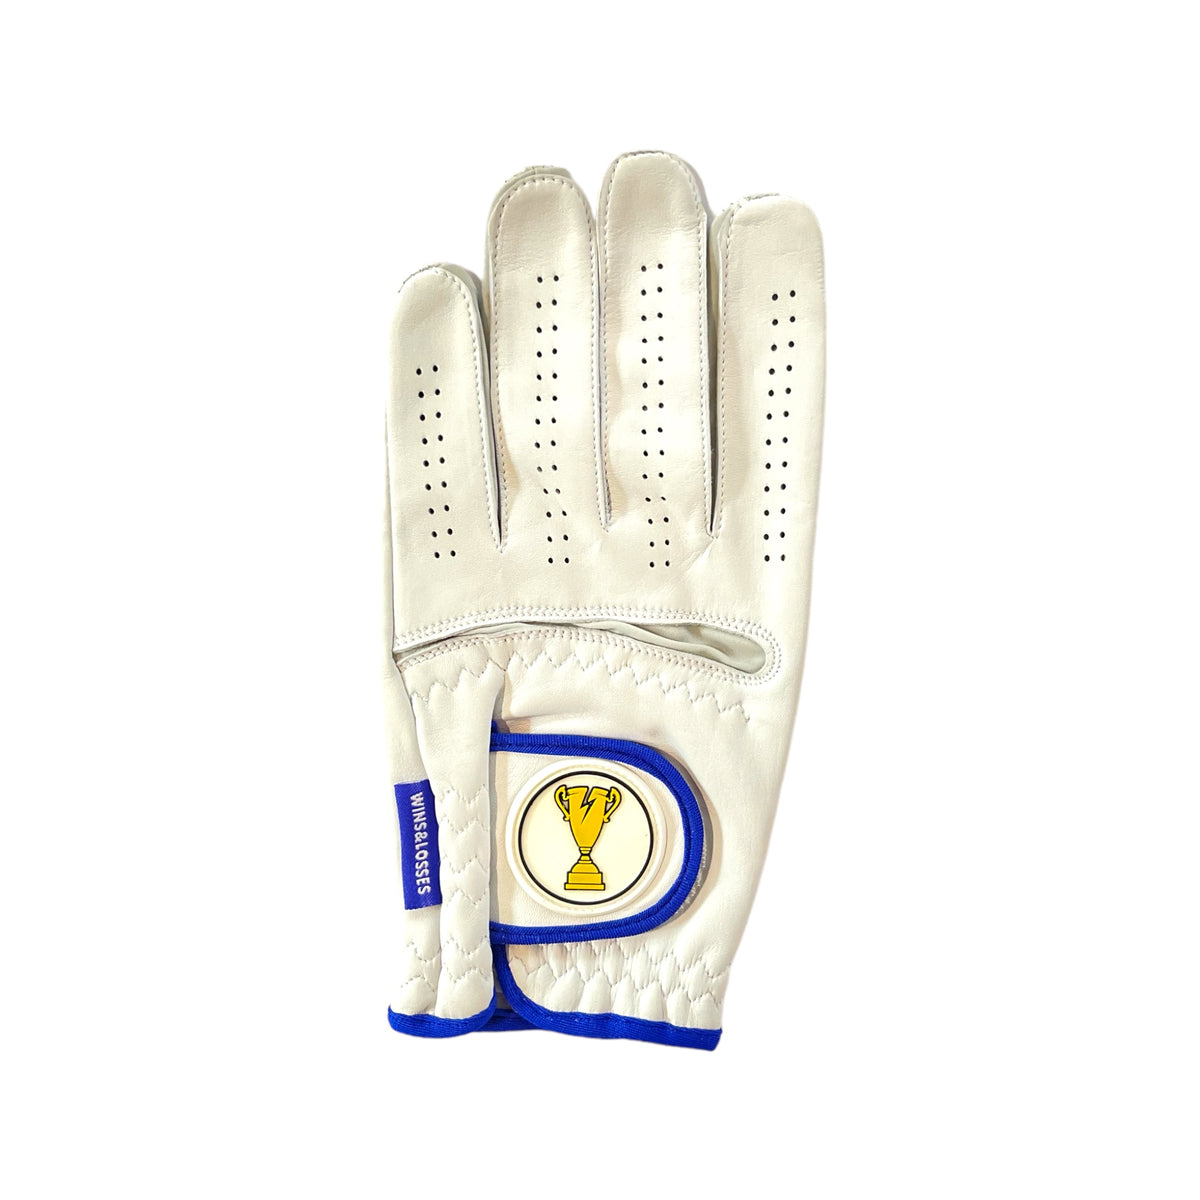 Trophy Golf Gloves